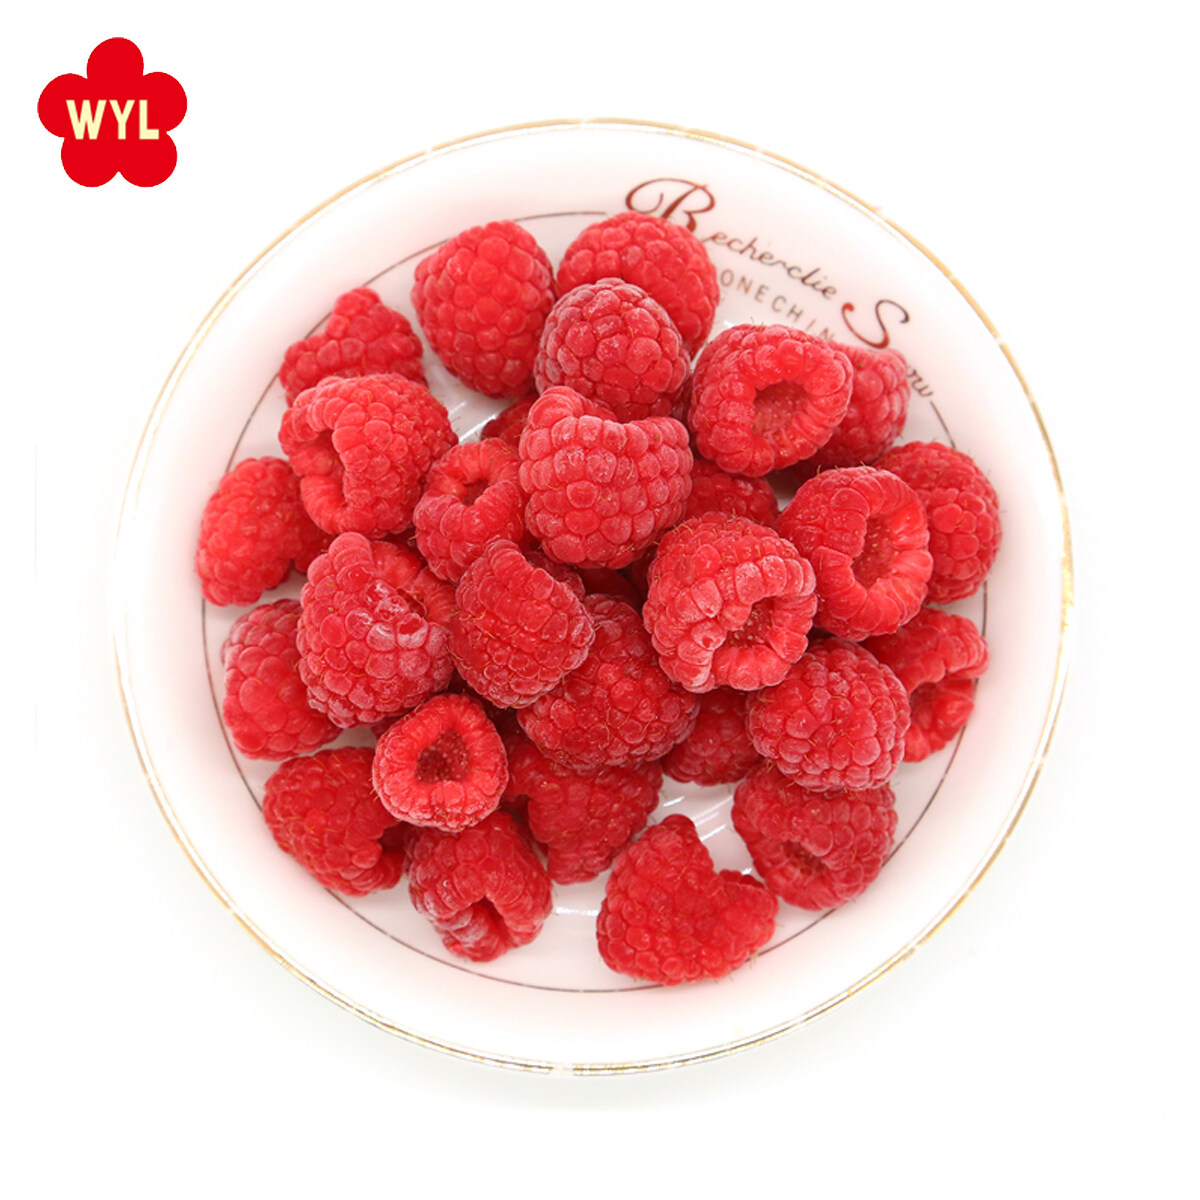 BULK wholesale IQF frozen raspberry price in China frozen fruits